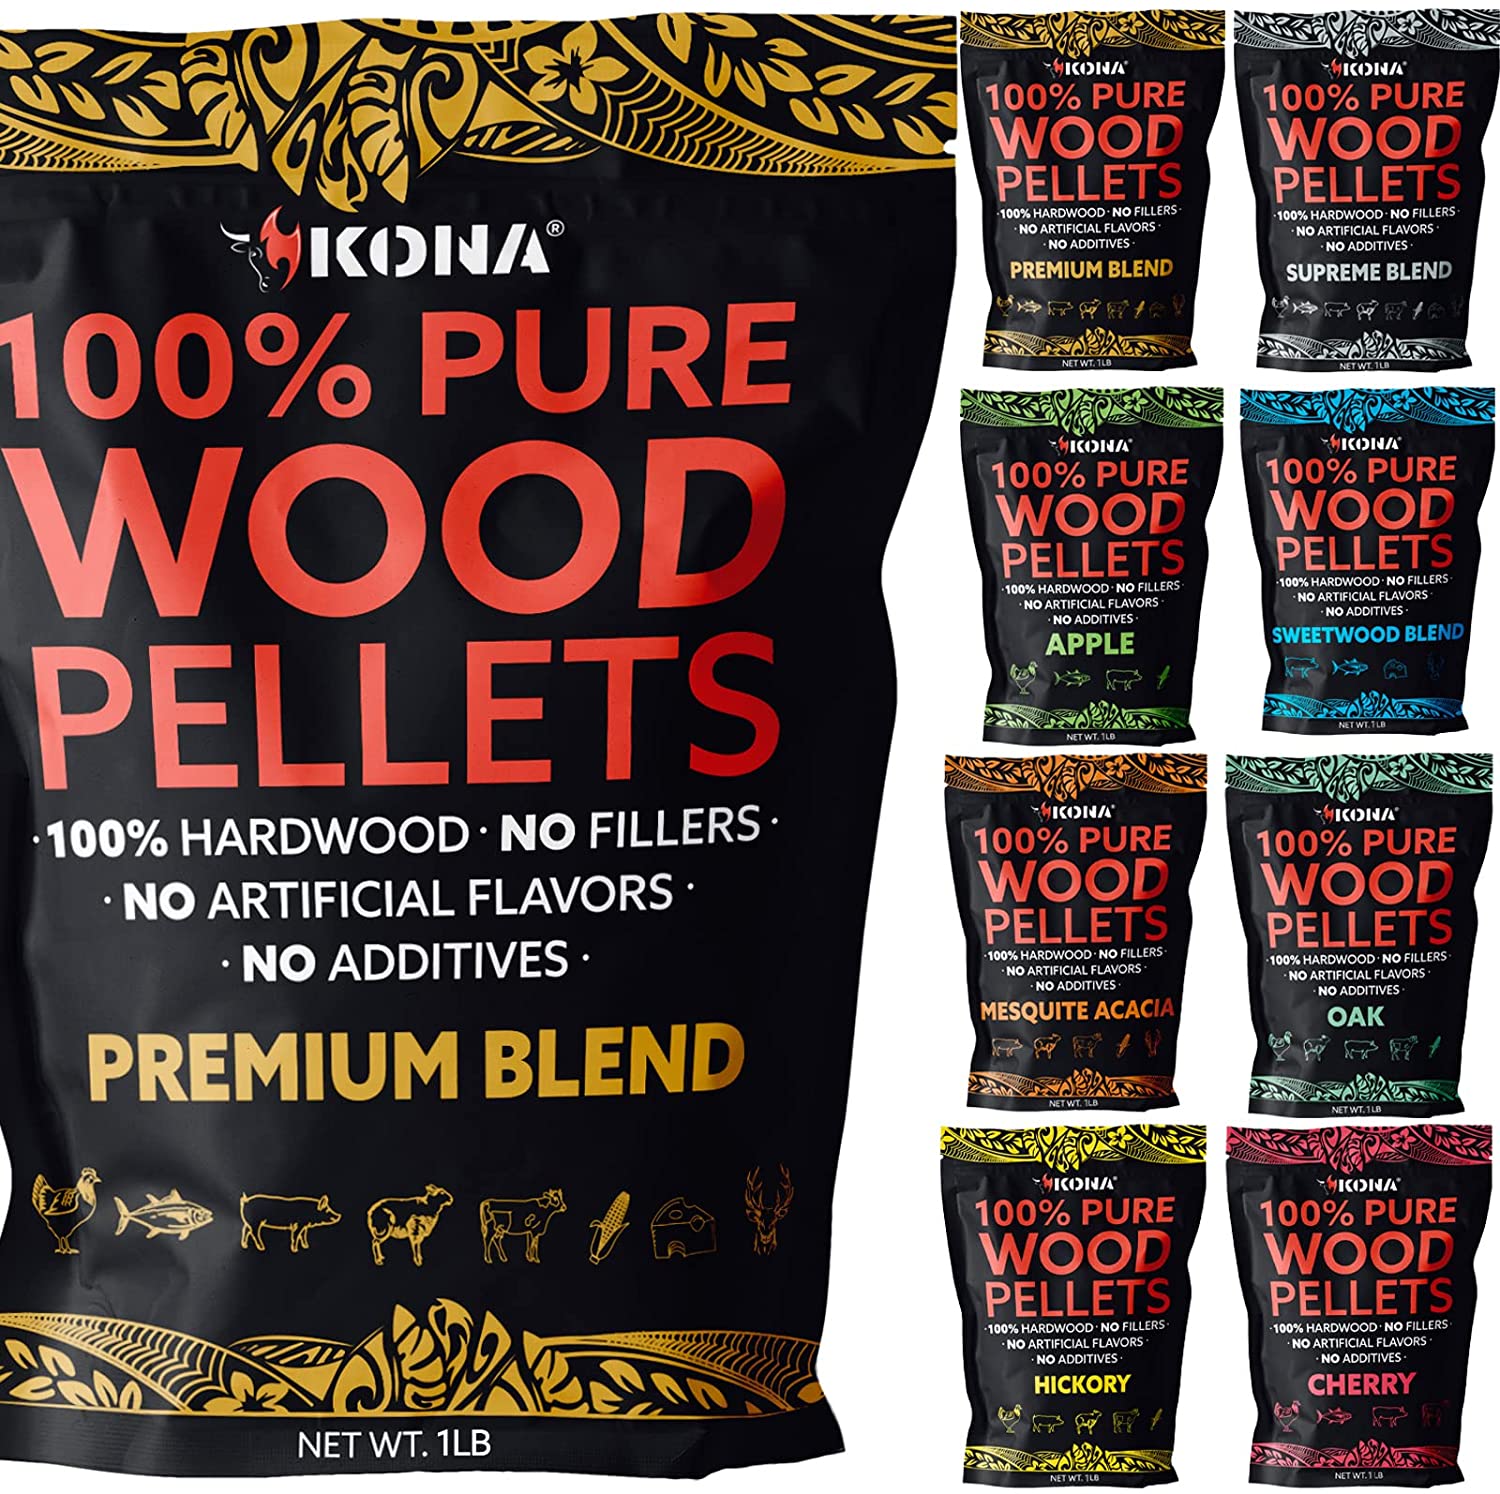  Kona Wood Pellets All Variety Pack, Intended for